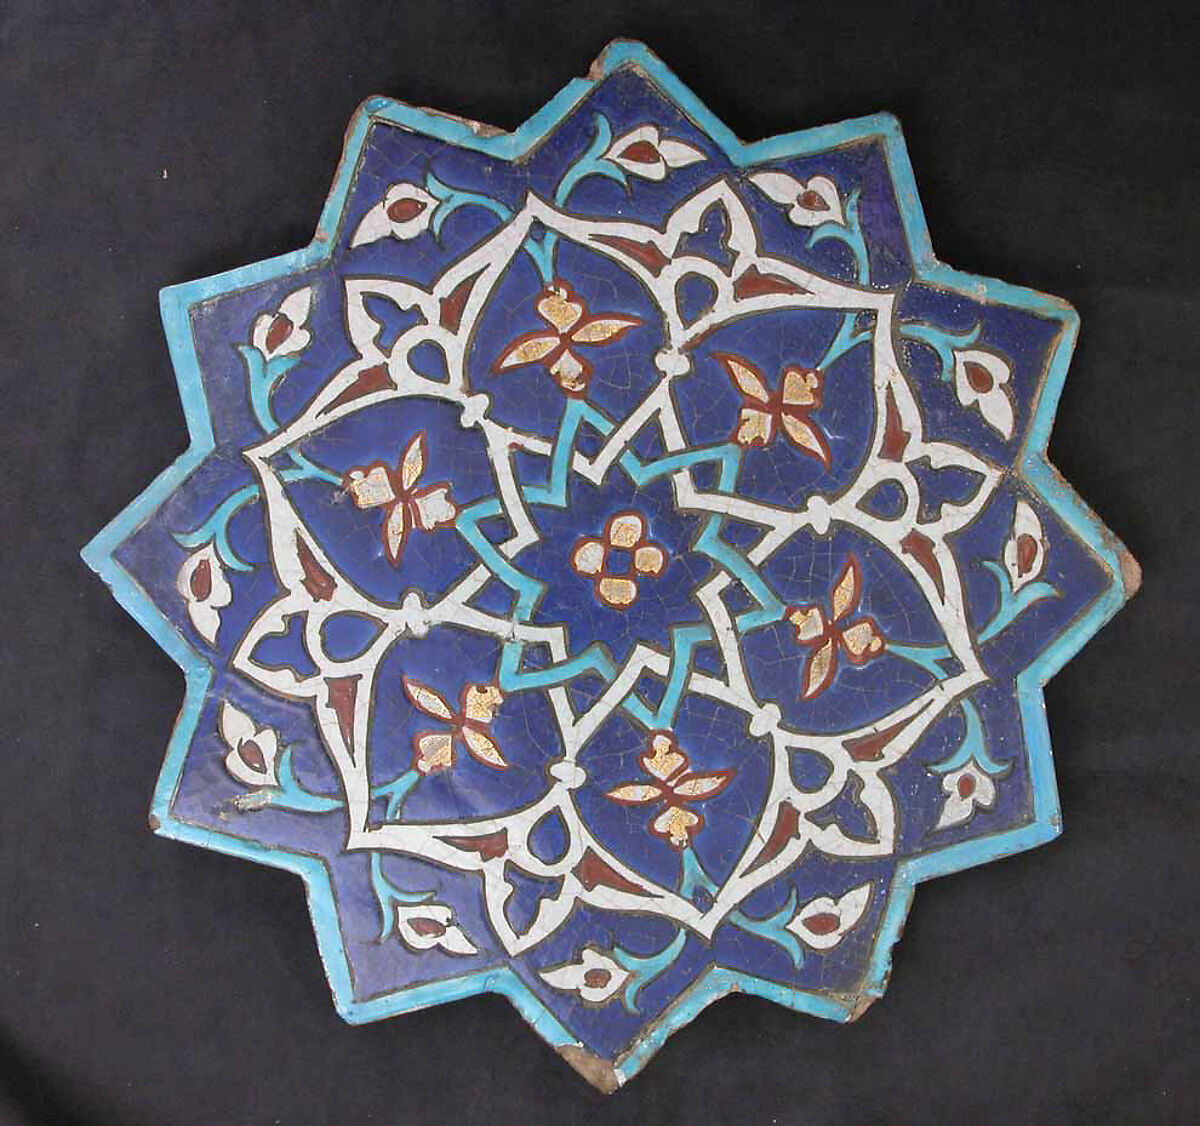 Twelve-Pointed Star-Shaped Tile, Stonepaste; polychrome glaze within black wax resist outlines (cuerda seca technique) 